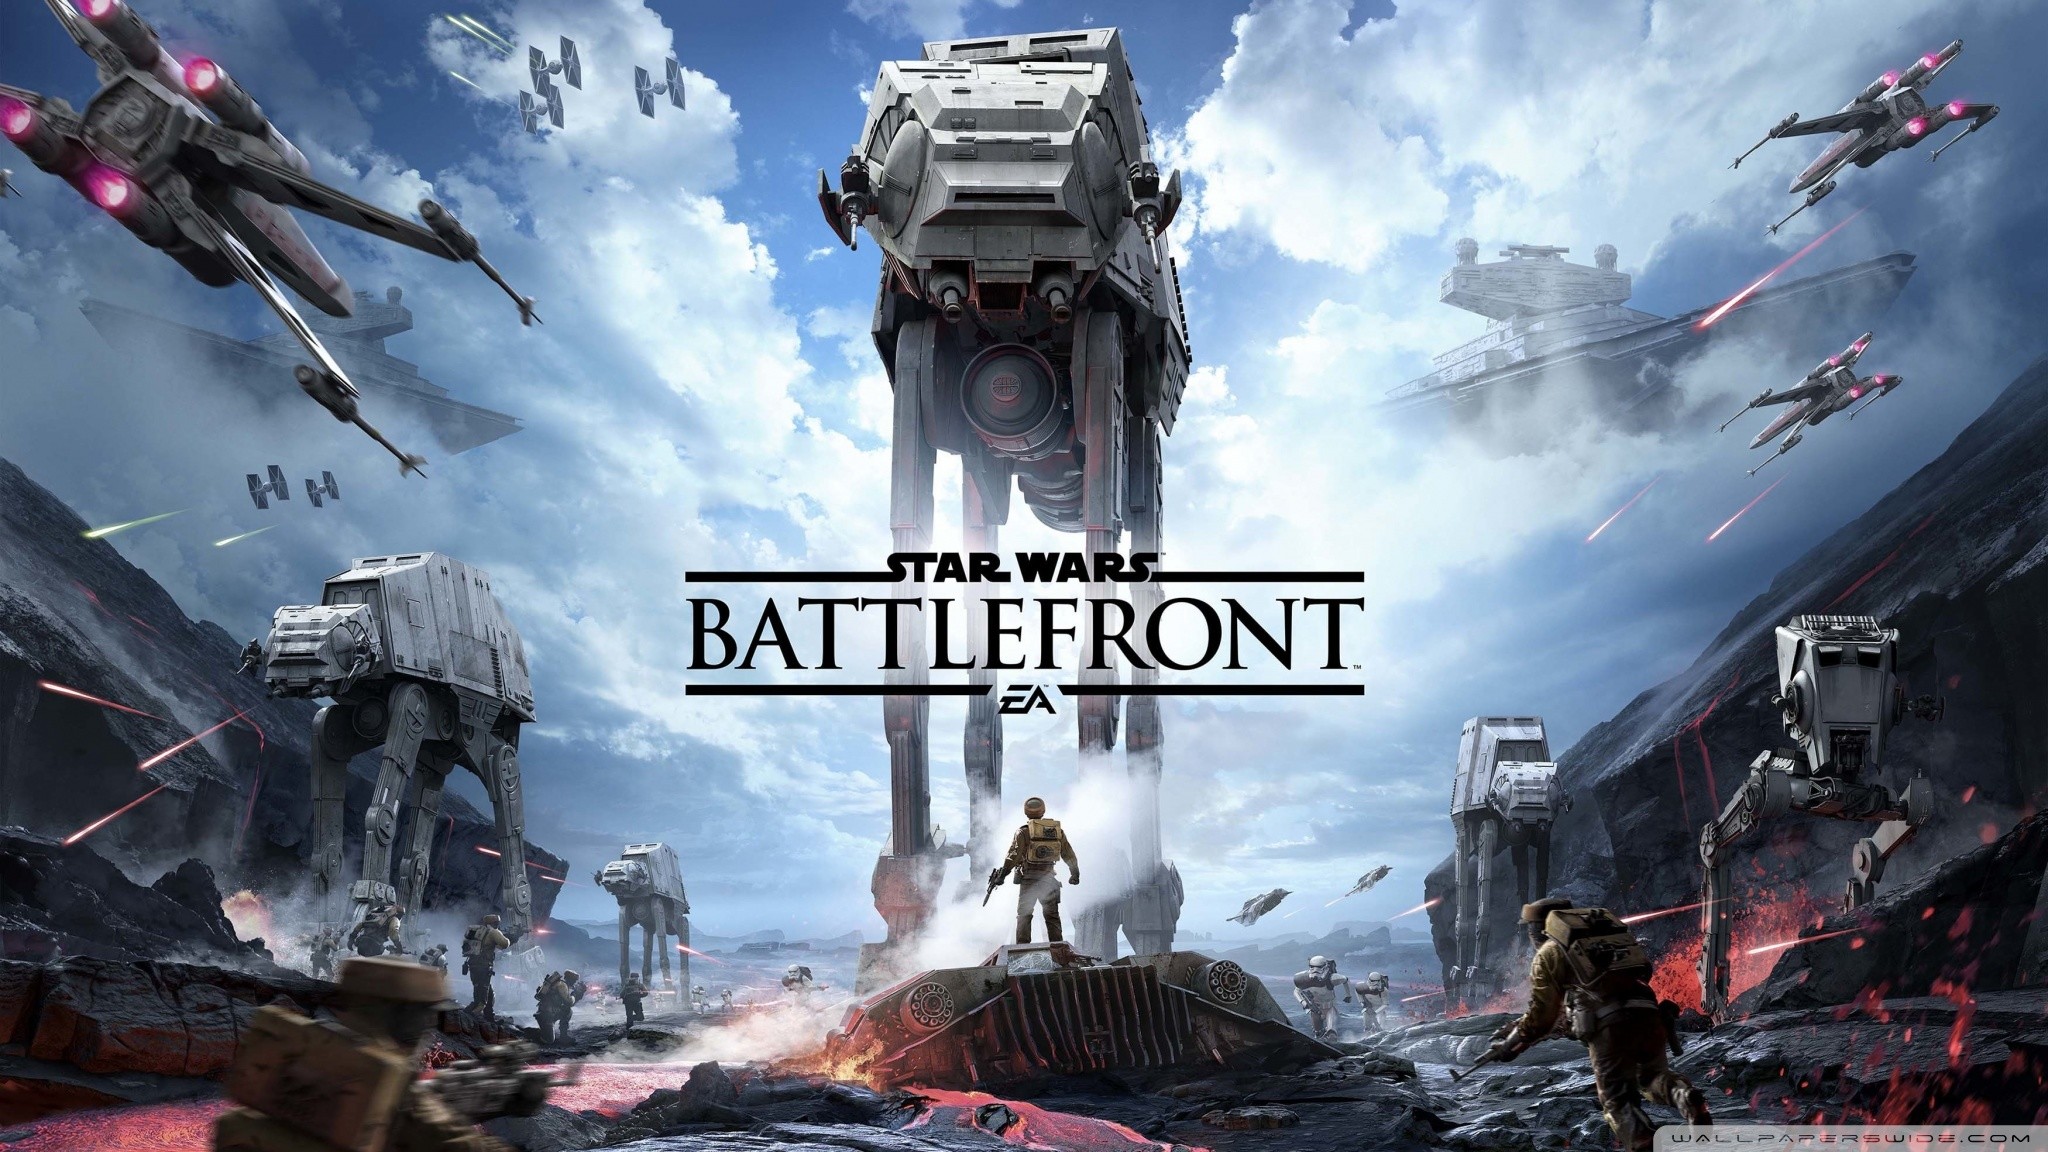 Star Wars Battlefront Wallpaper background picture